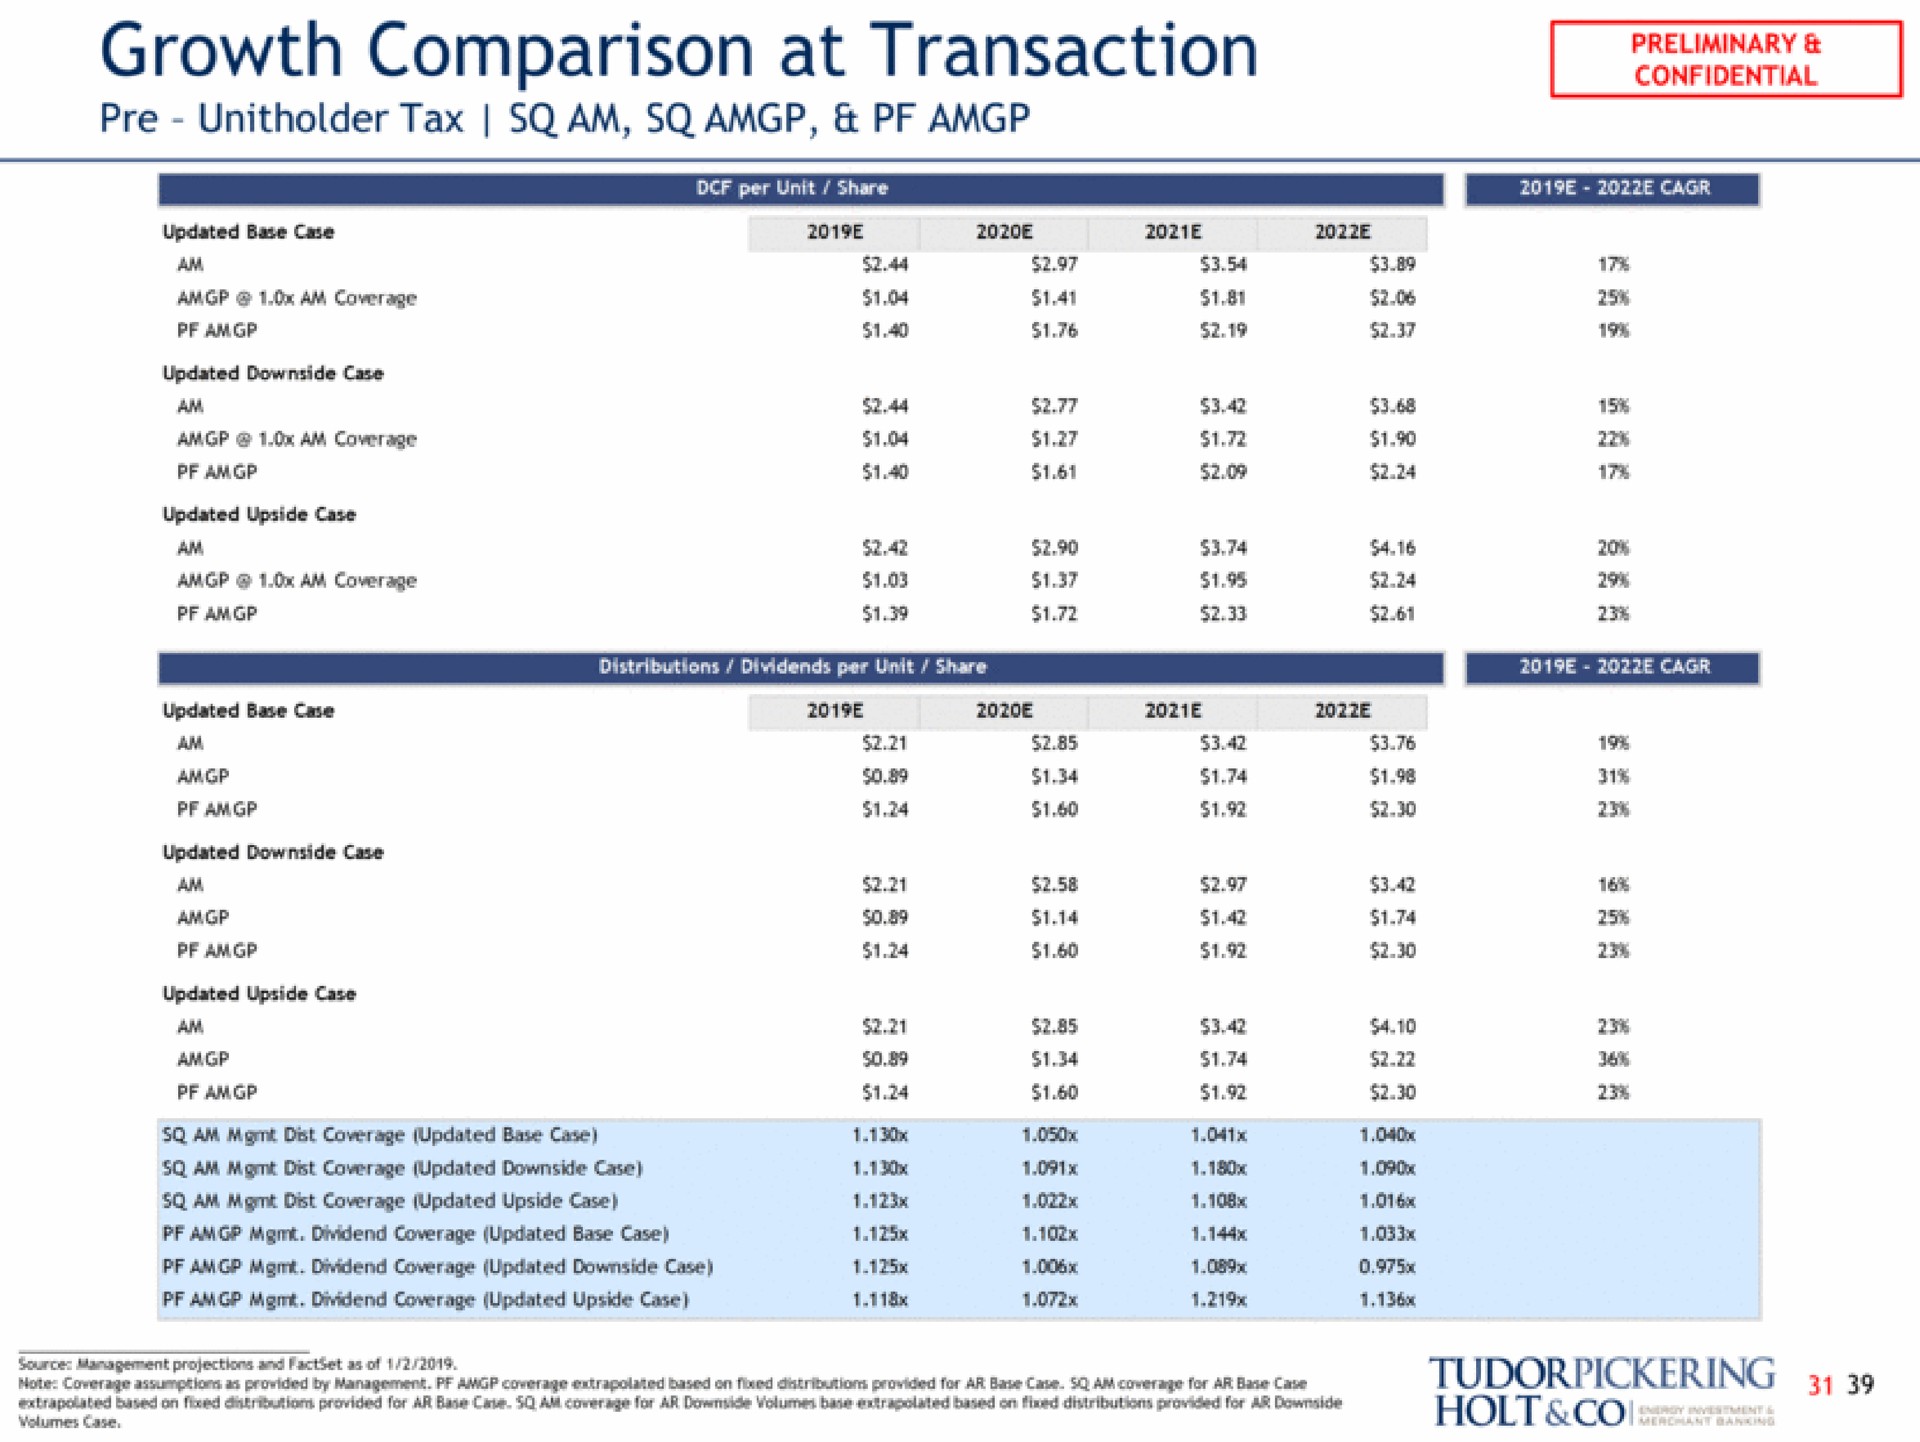 growth comparison at transaction | Tudor, Pickering, Holt & Co